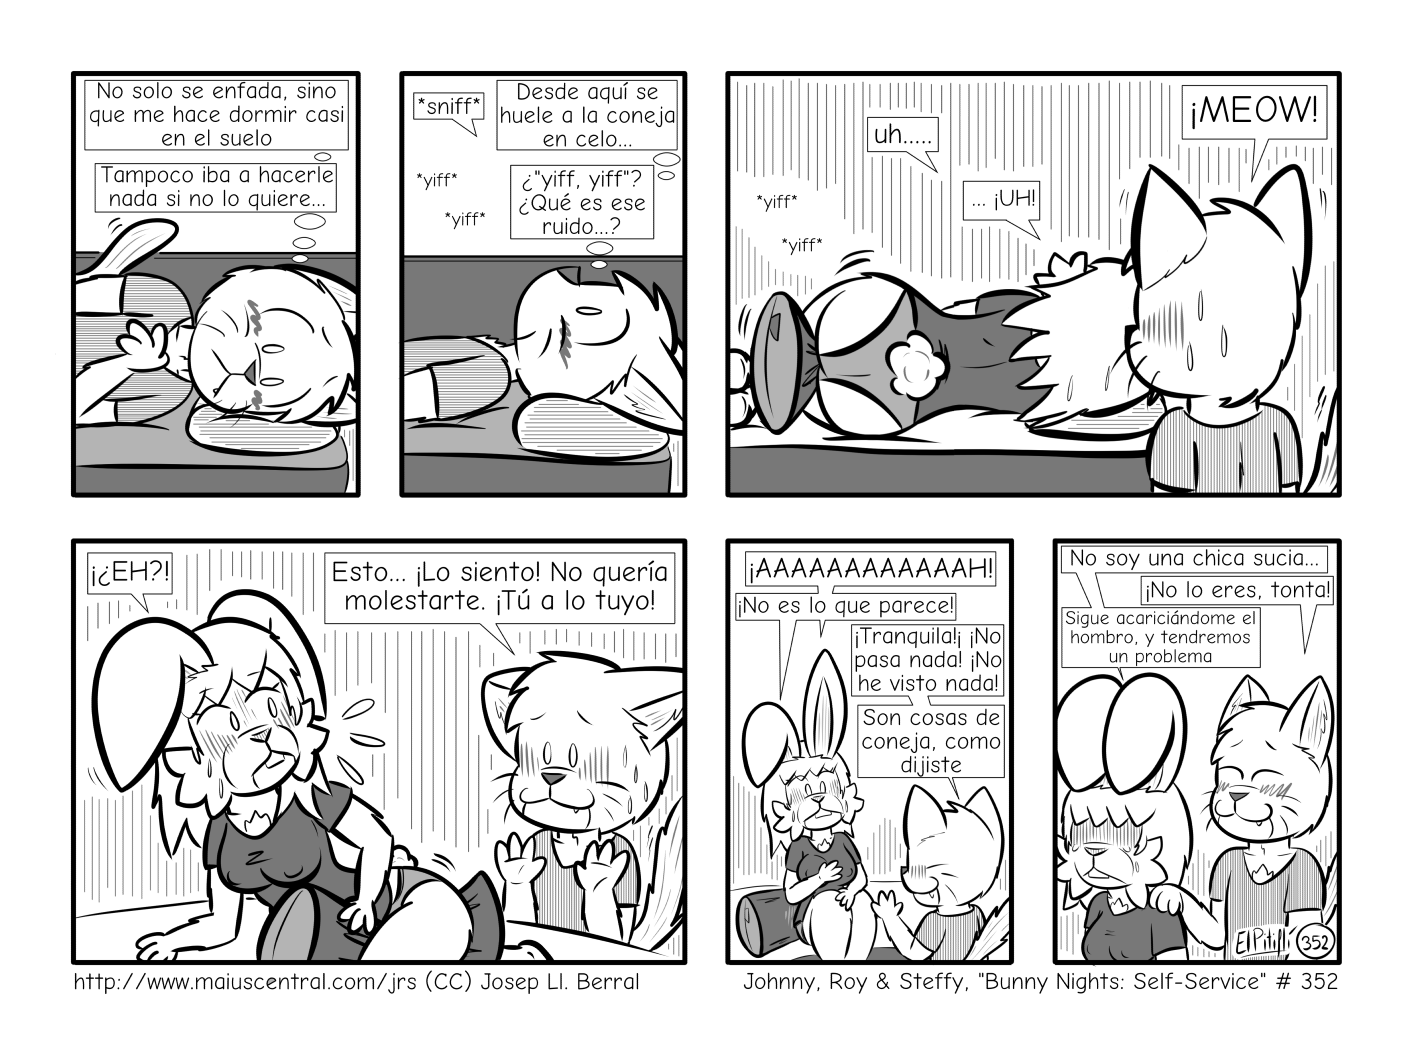 Bunny Nights: Self-Service